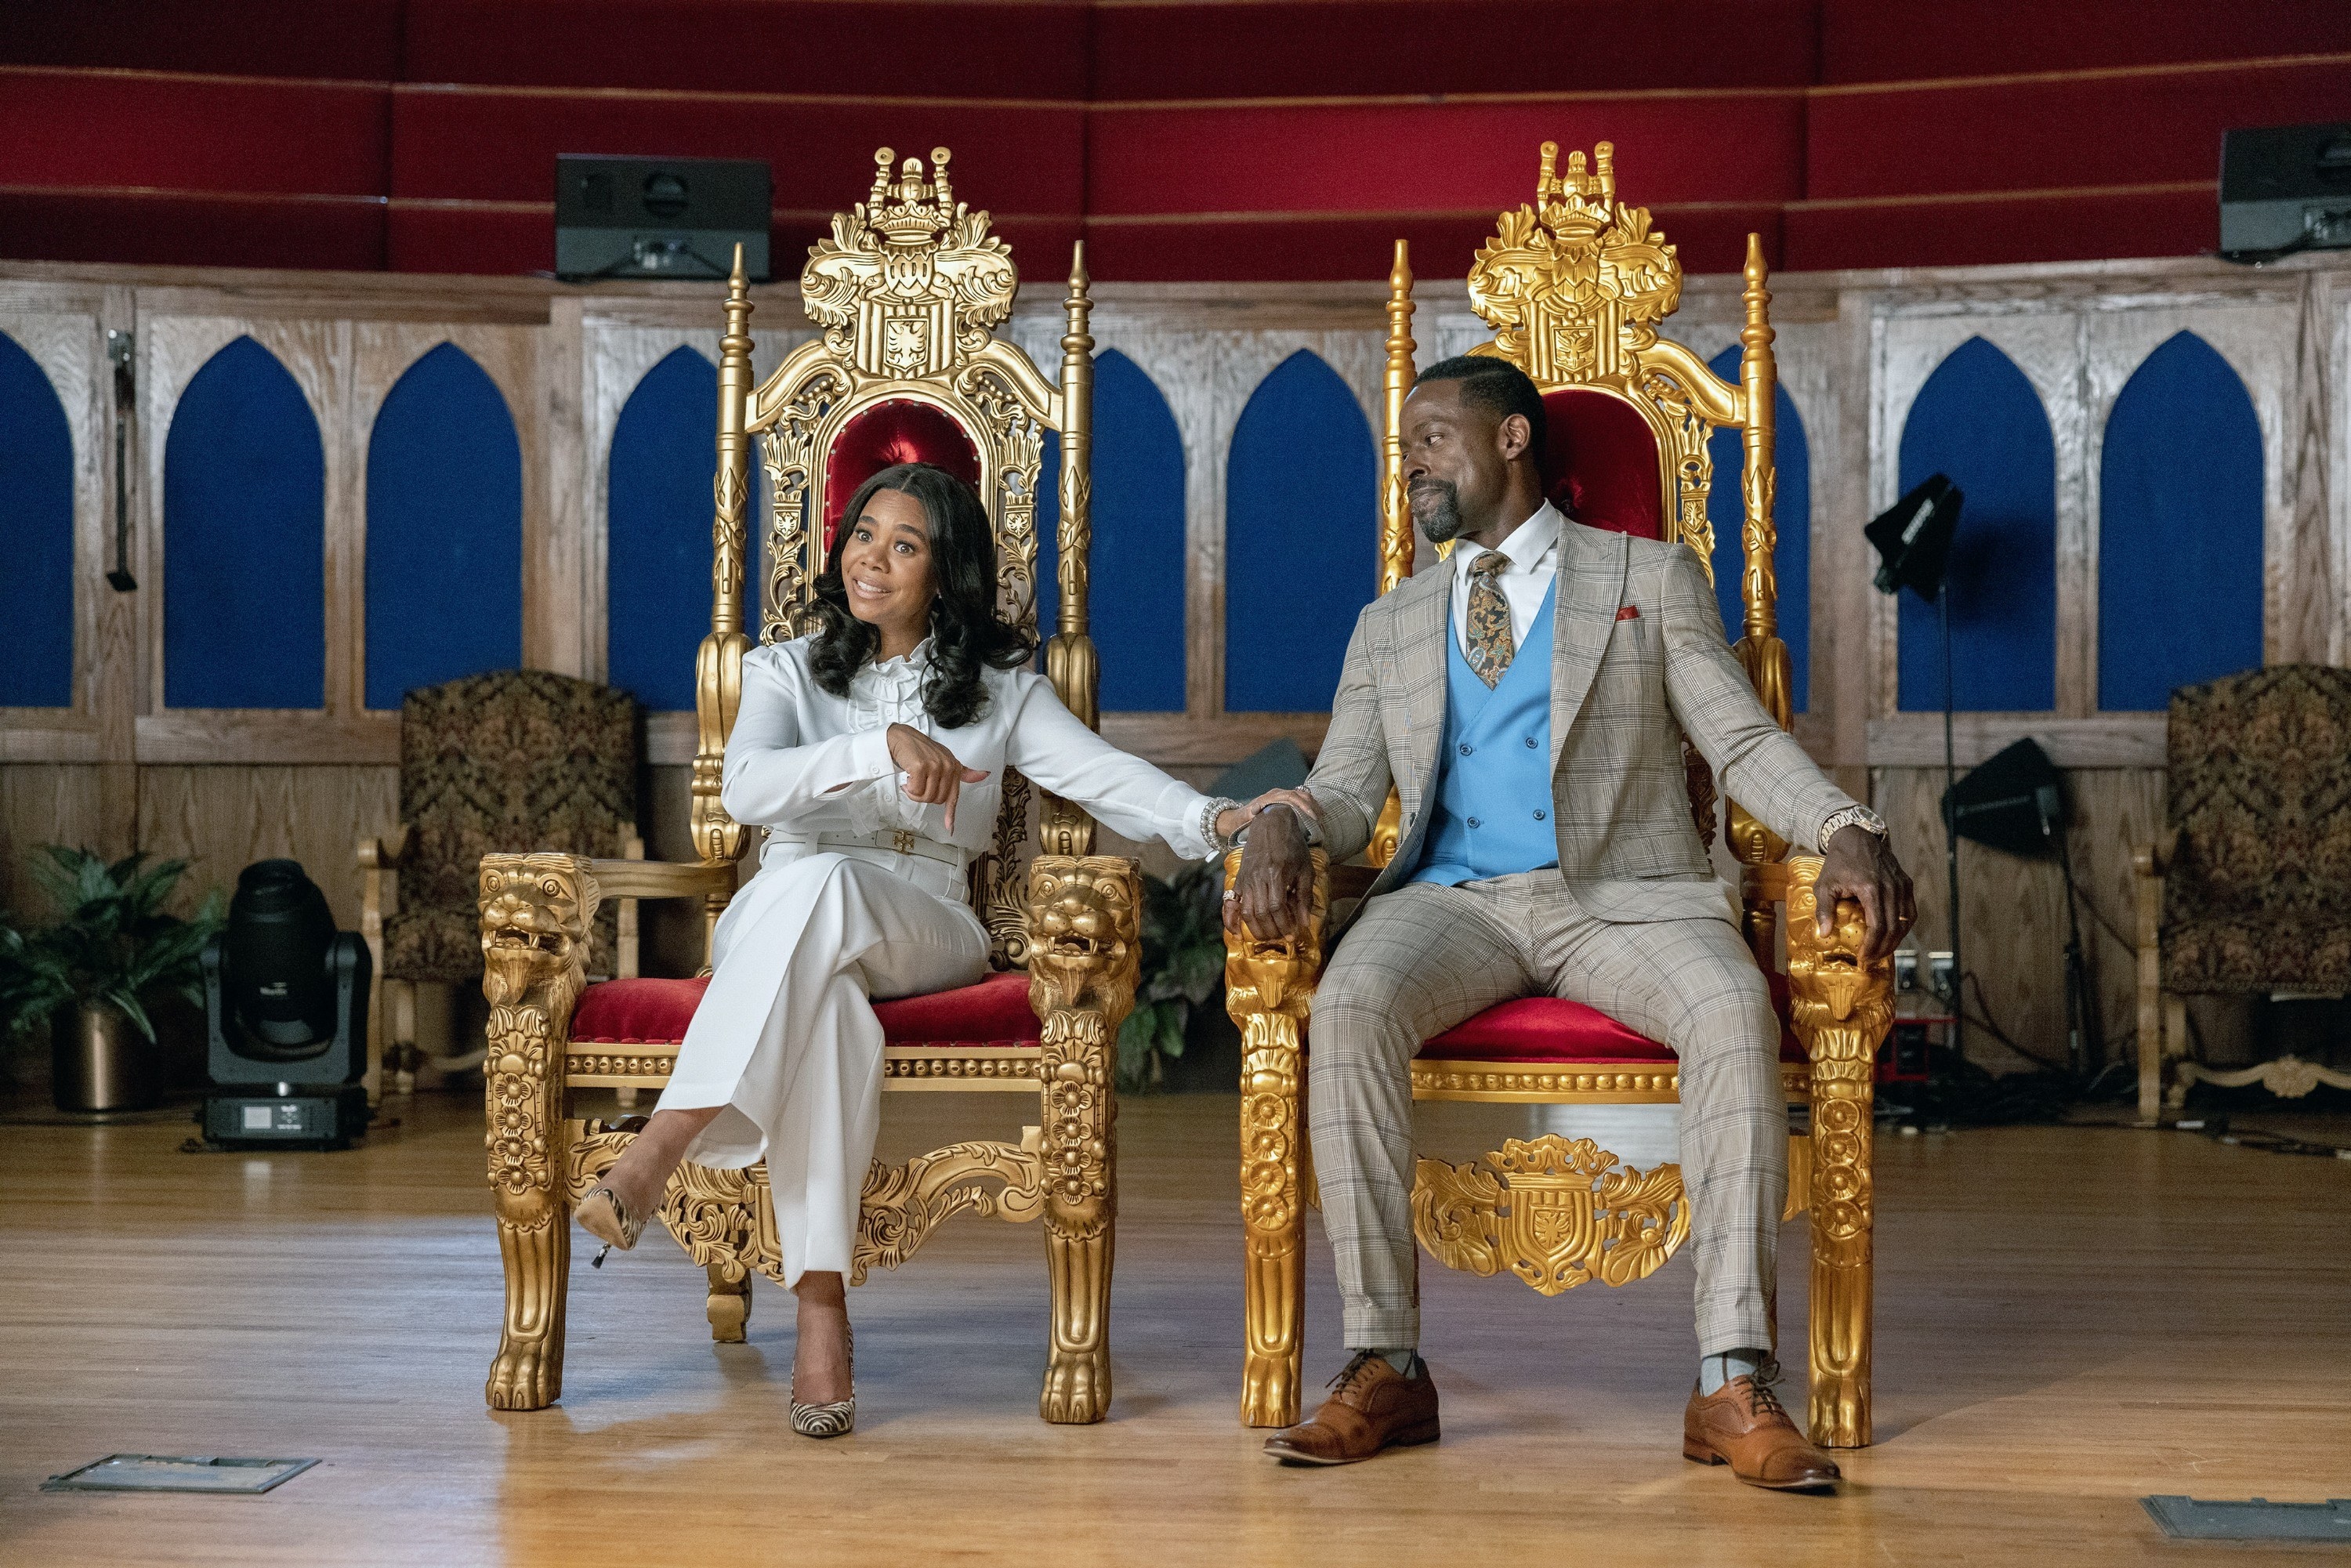 Regina Hall and Sterling K. Brown sit in thrones